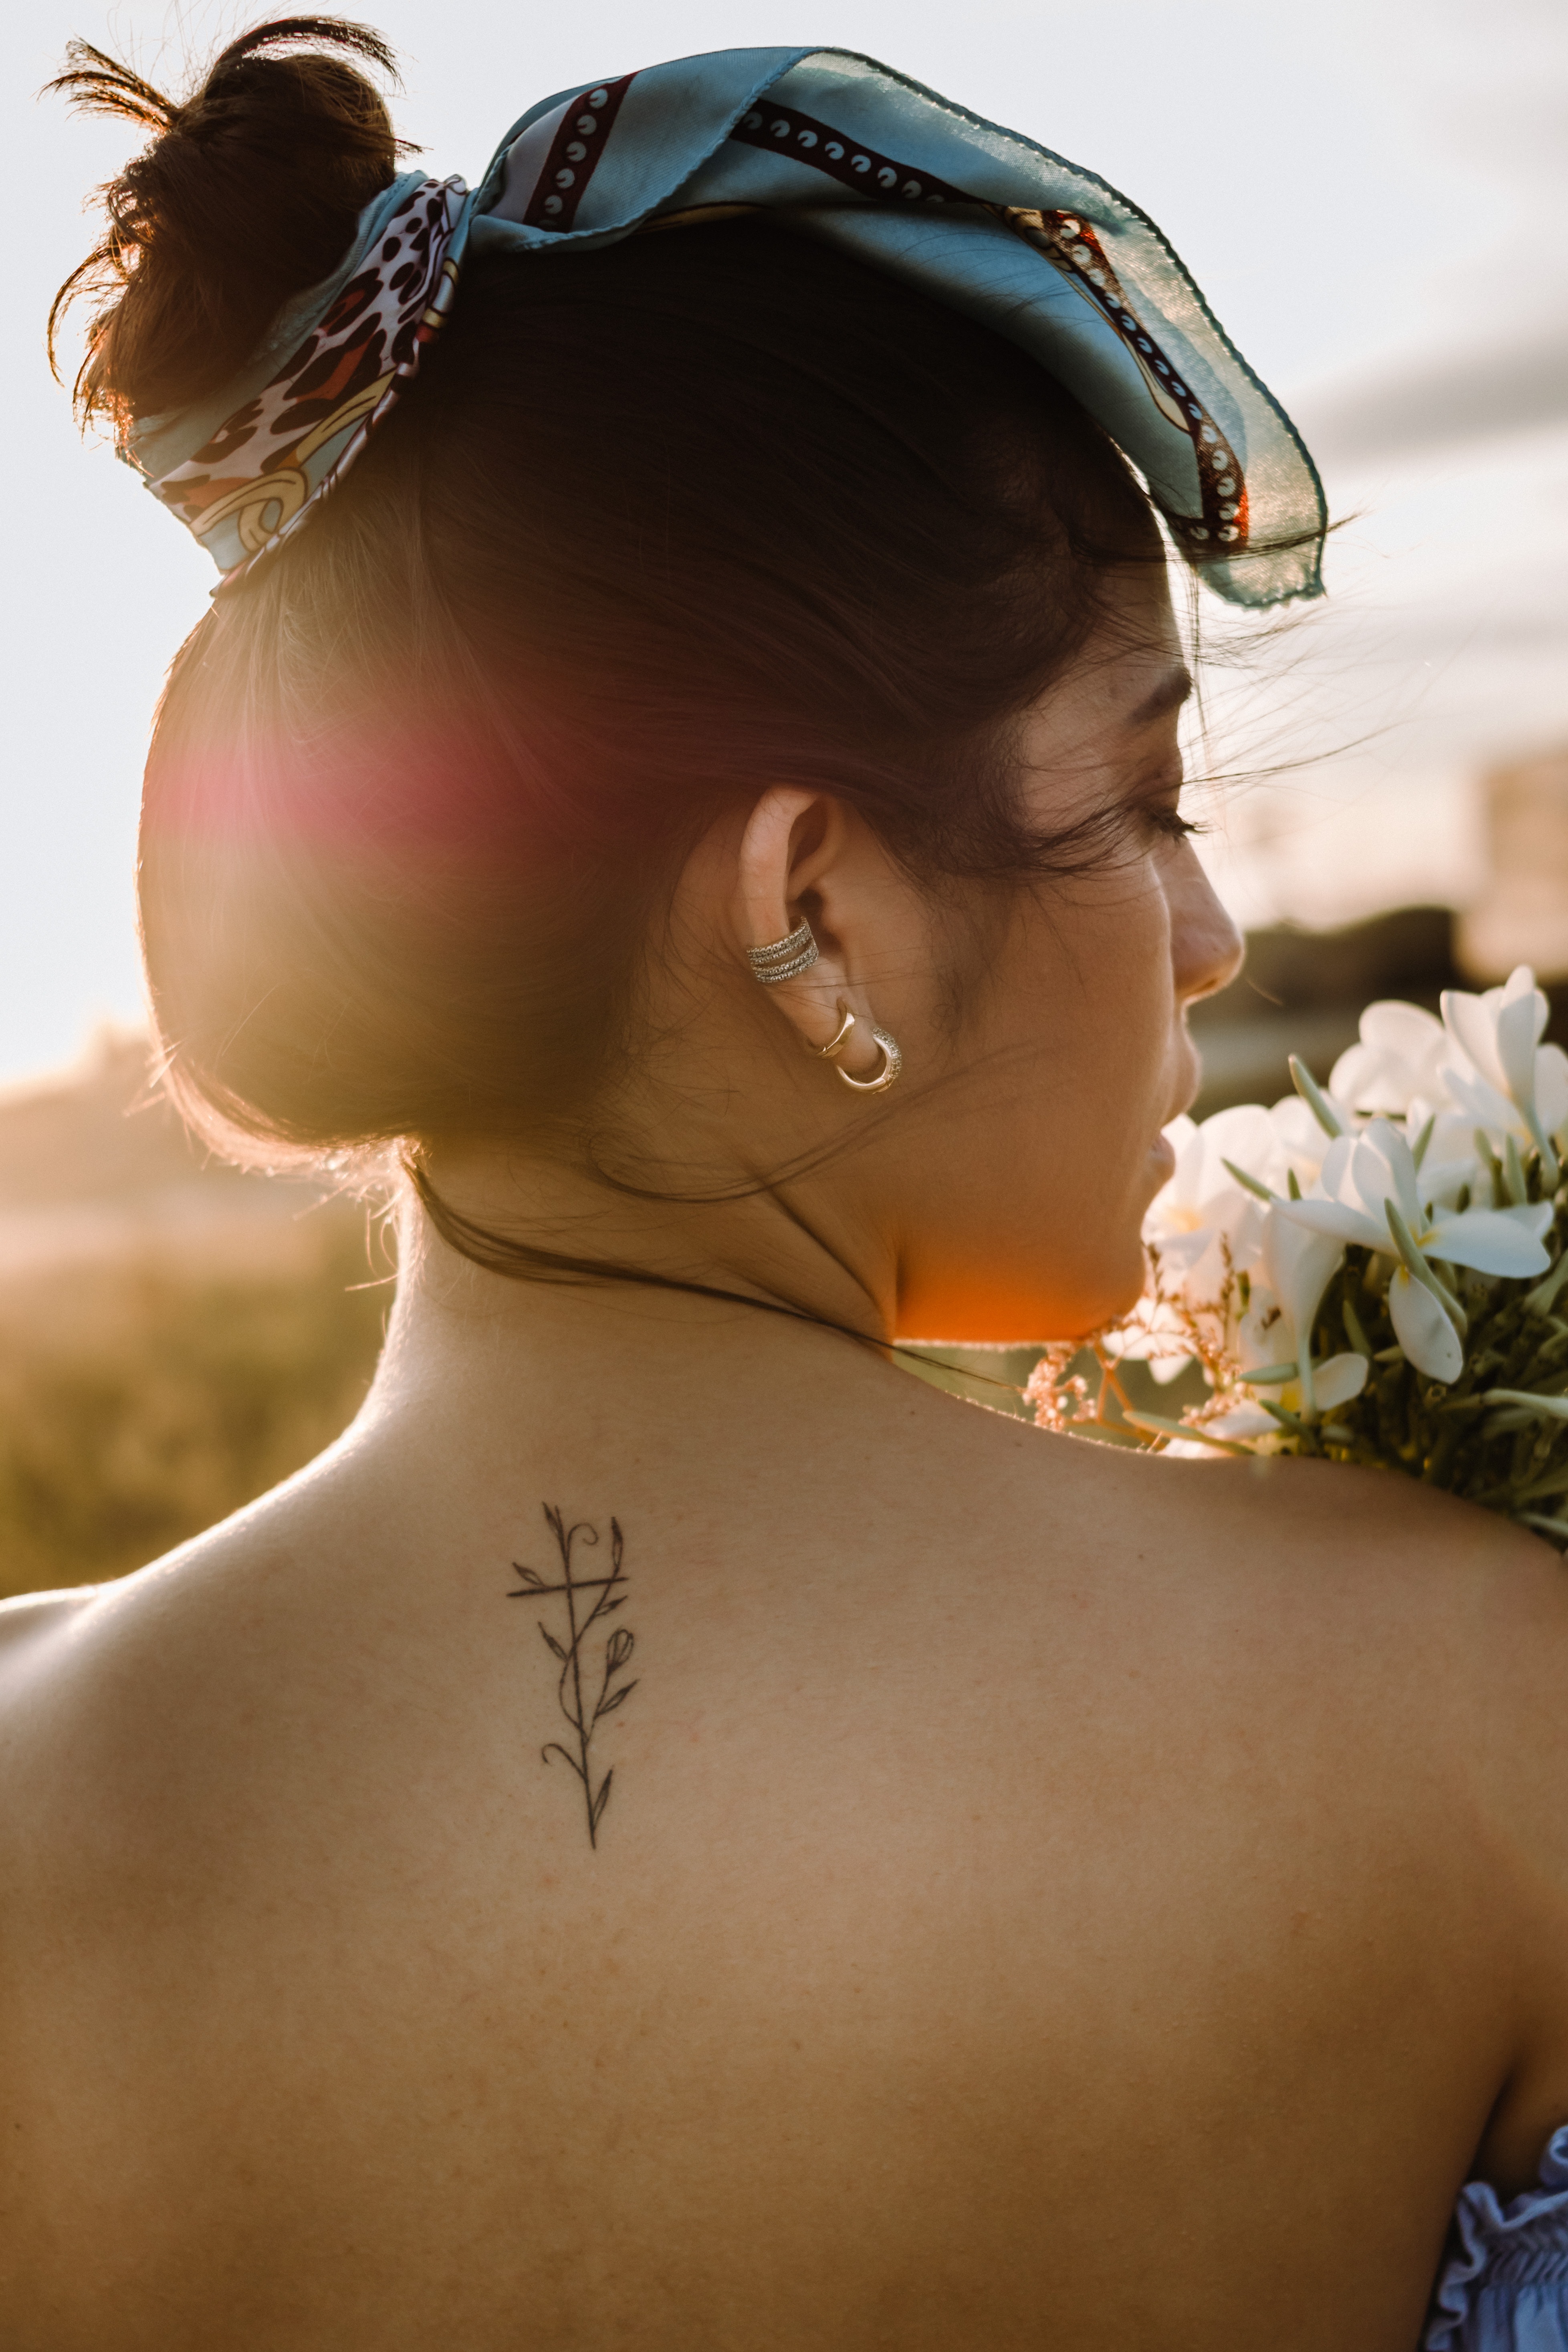 Share more than 75 artistic minimalist tattoos latest